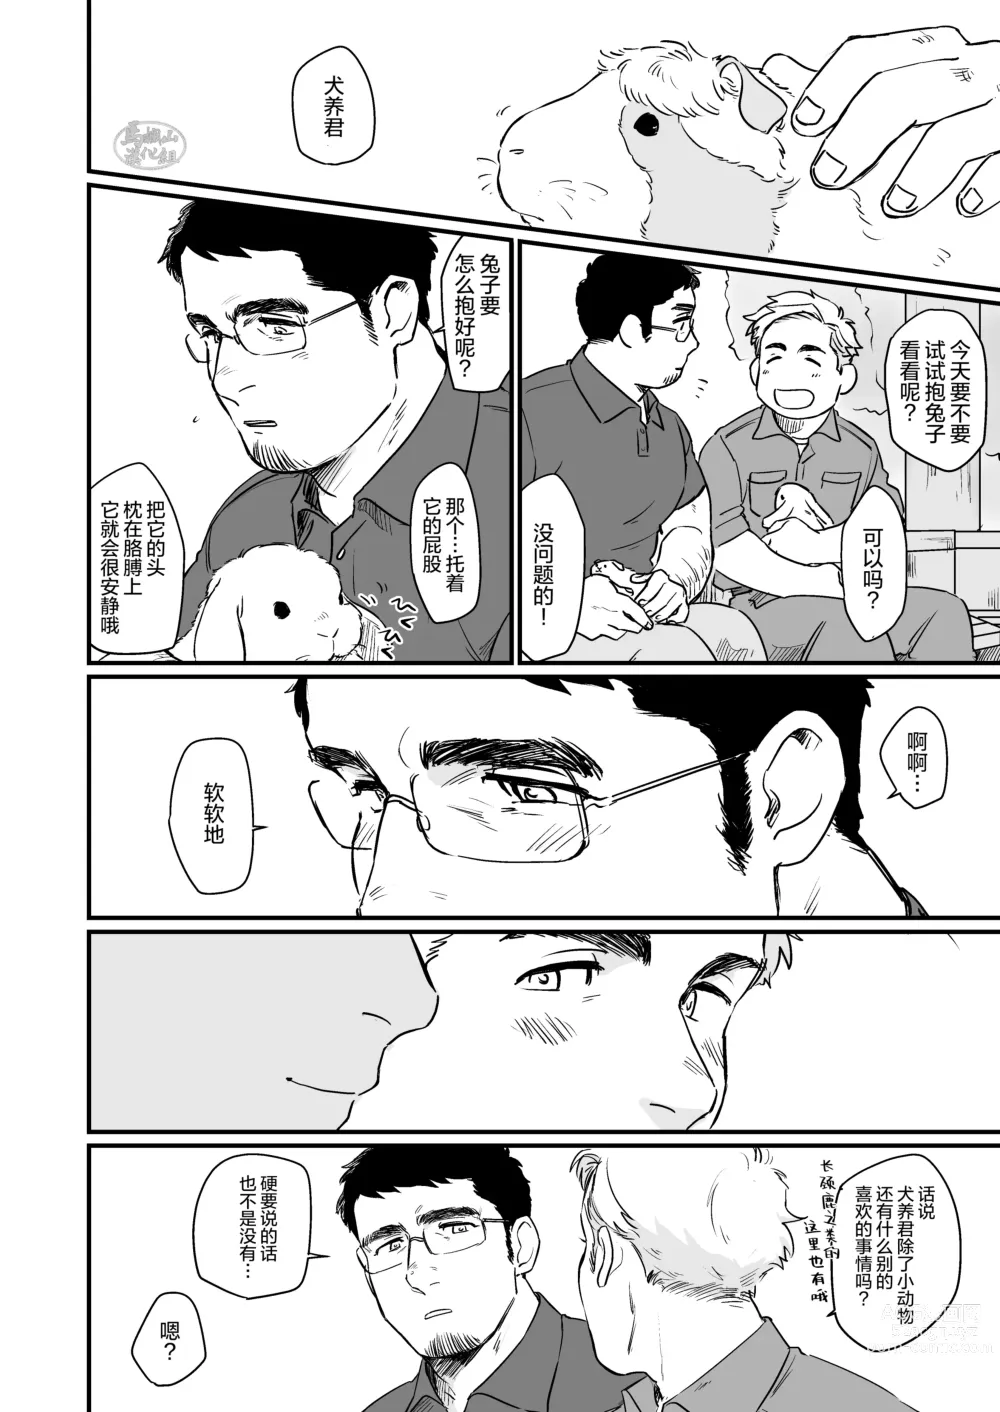 Page 6 of manga ビースティコンプレックス.动物狂想曲